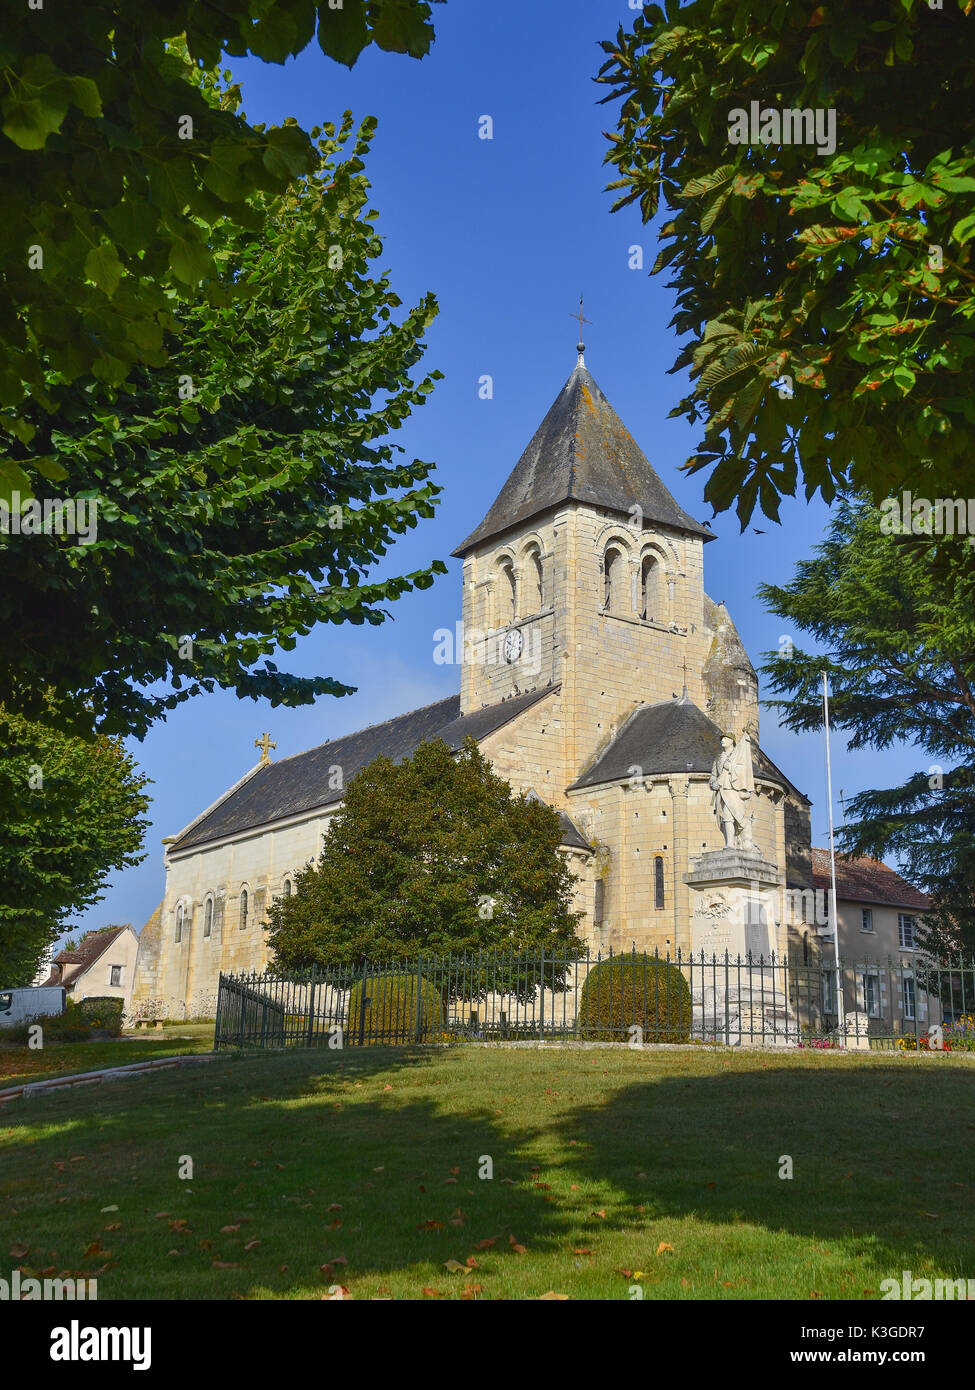 Village church, Bossay-sur-Claise, France. Stock Photo